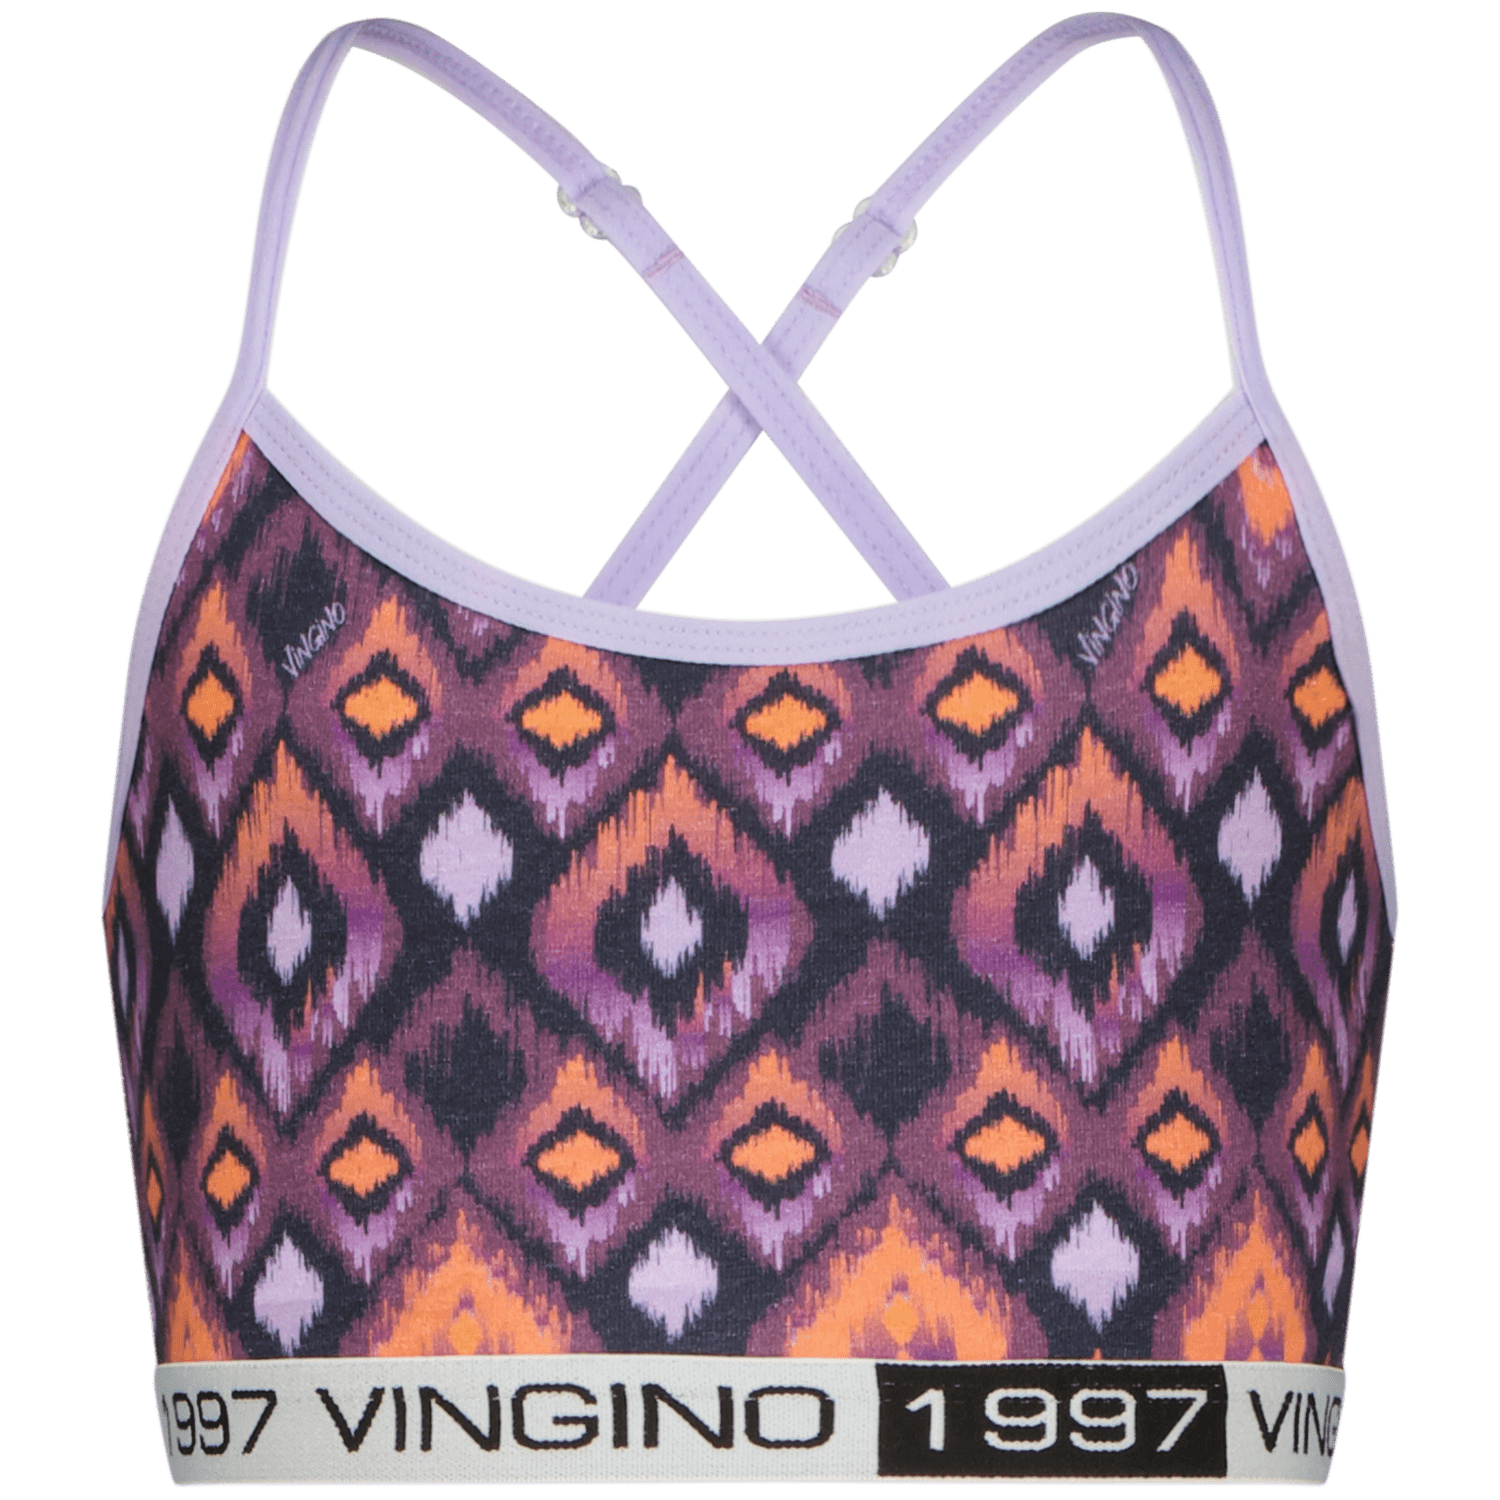 VINGINO Ondergoed set G-so24-4 aztex